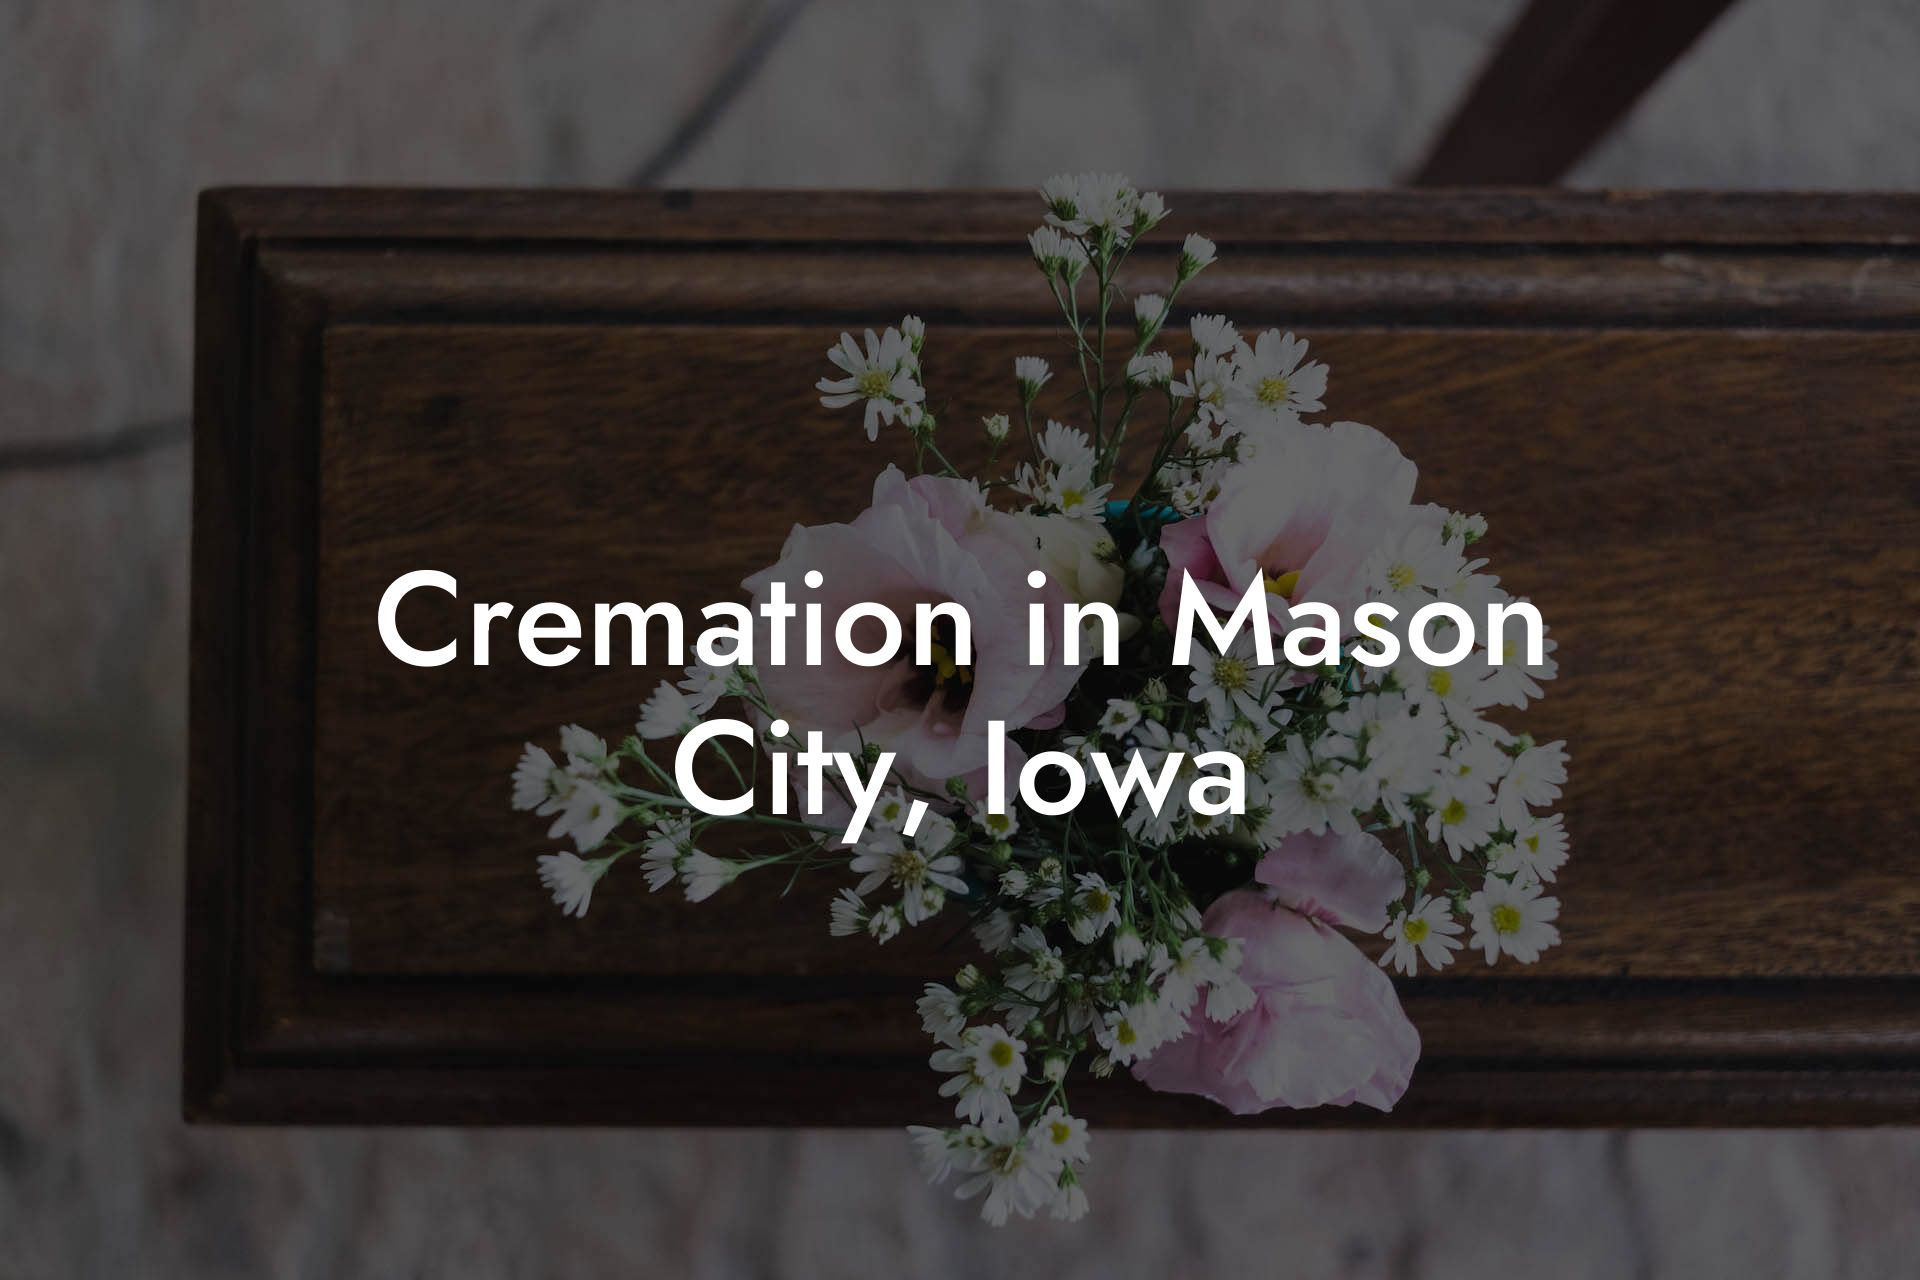 Cremation in Mason City, Iowa